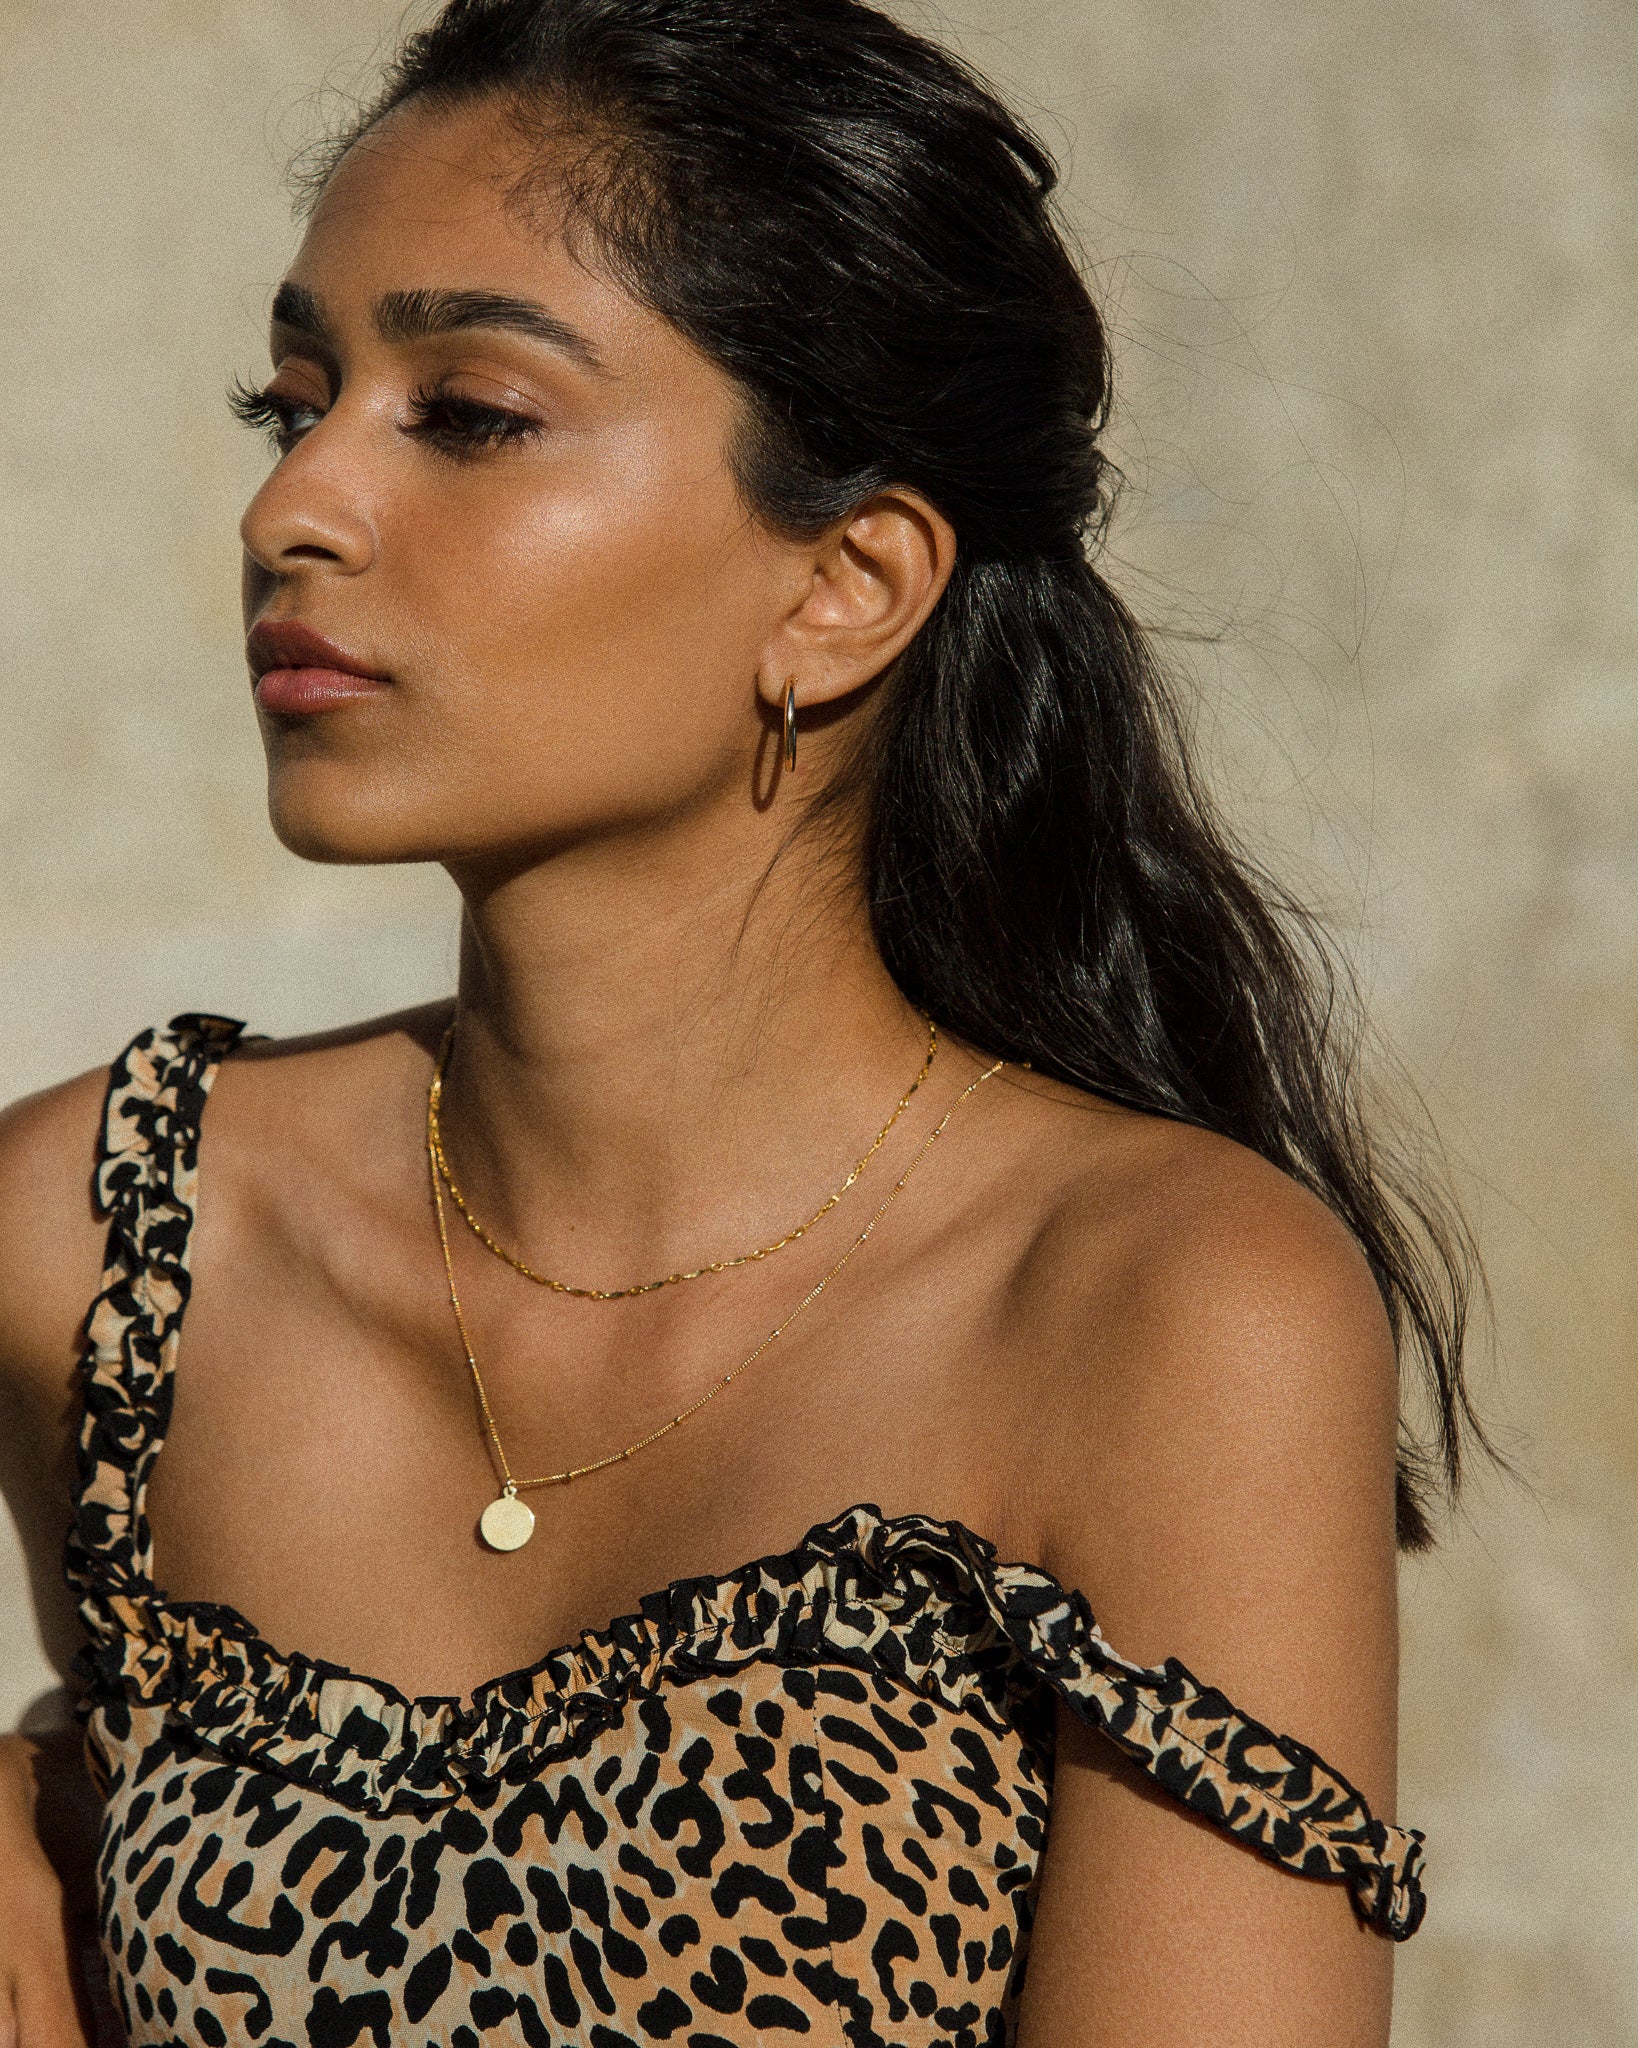 Essential 14K Gold Filled Hoop Earrings | Inspiration Her Jewellery